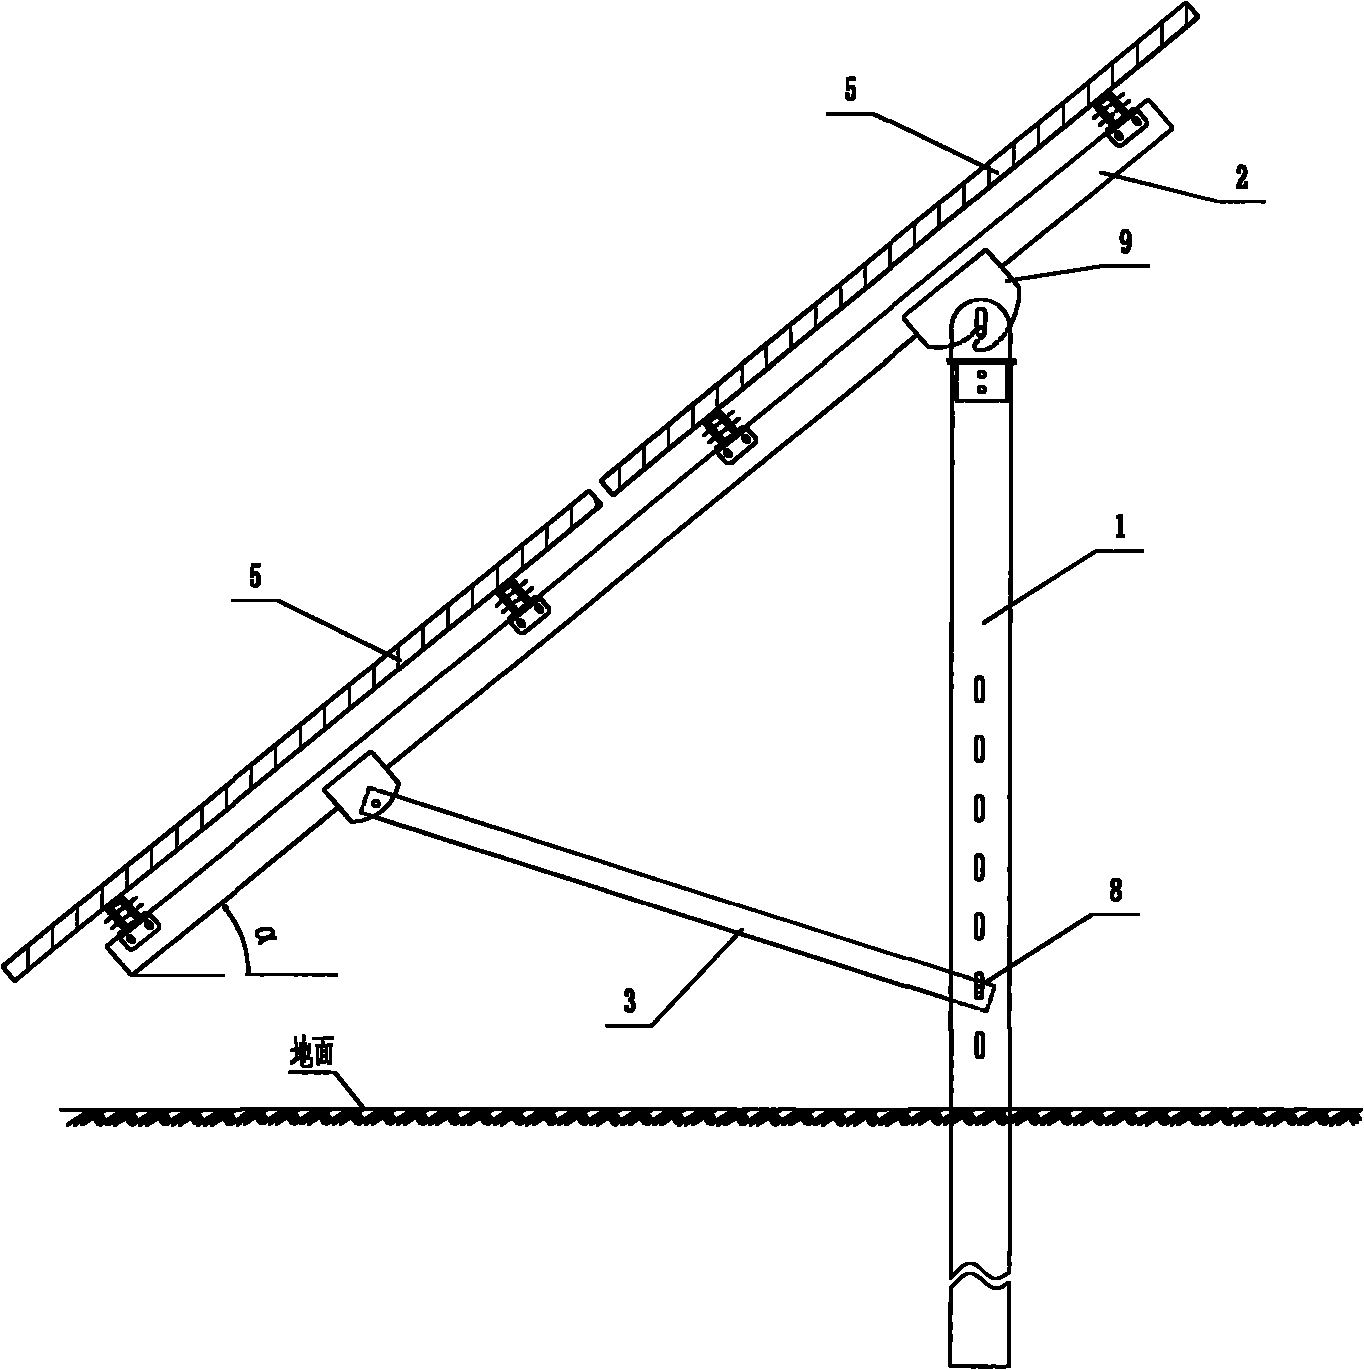 Pile-column integrated ground photovoltaic bracket